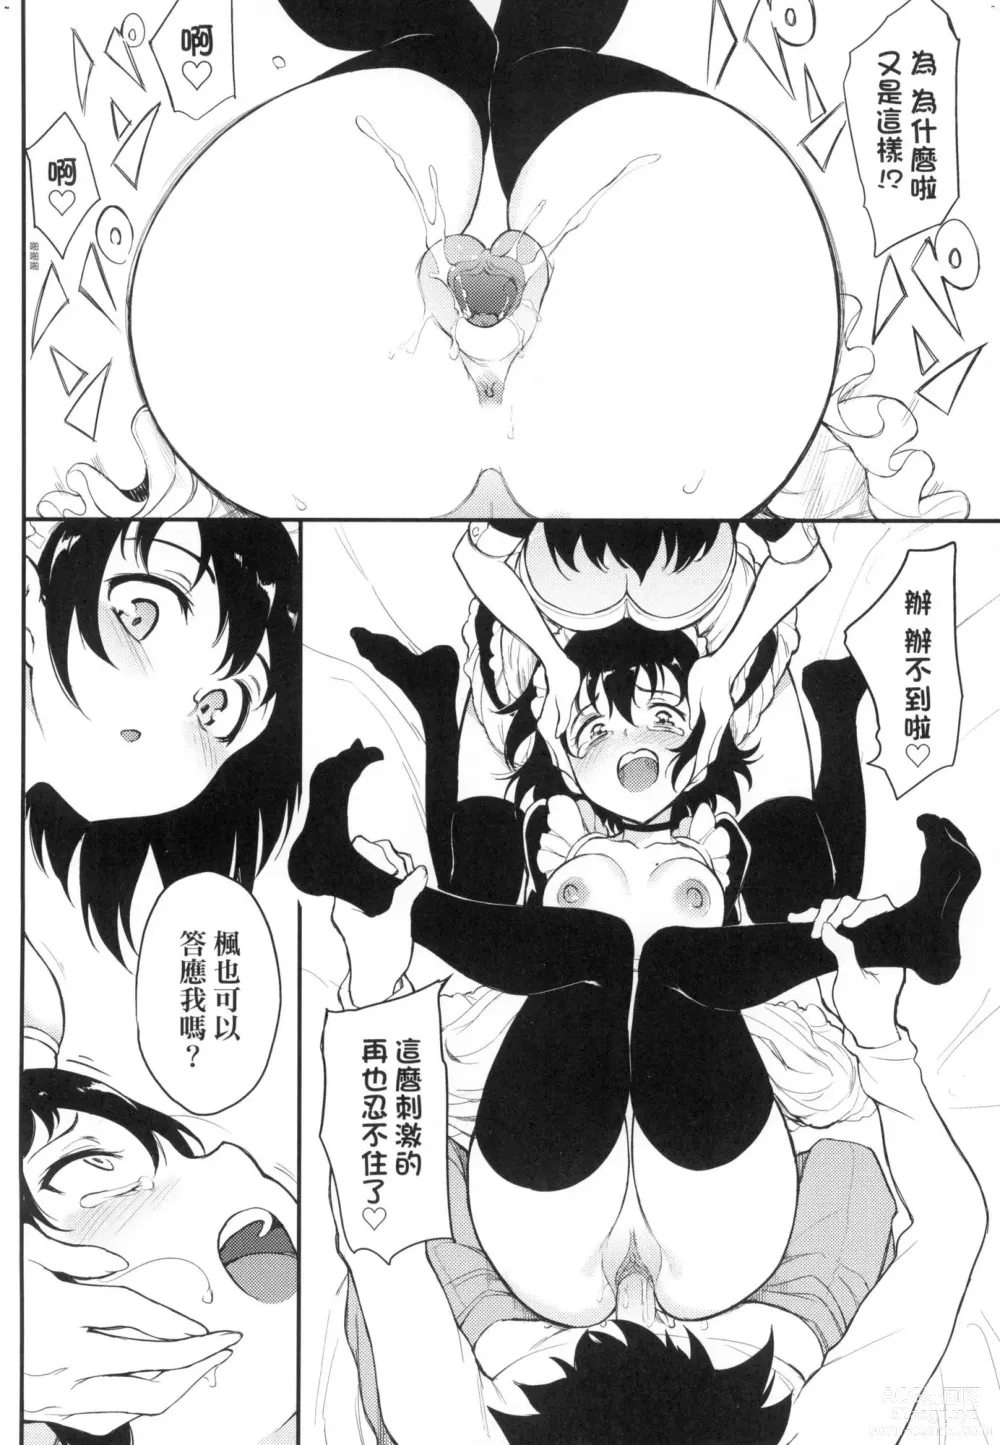 Page 196 of manga 珍愛著你♥ (decensored)